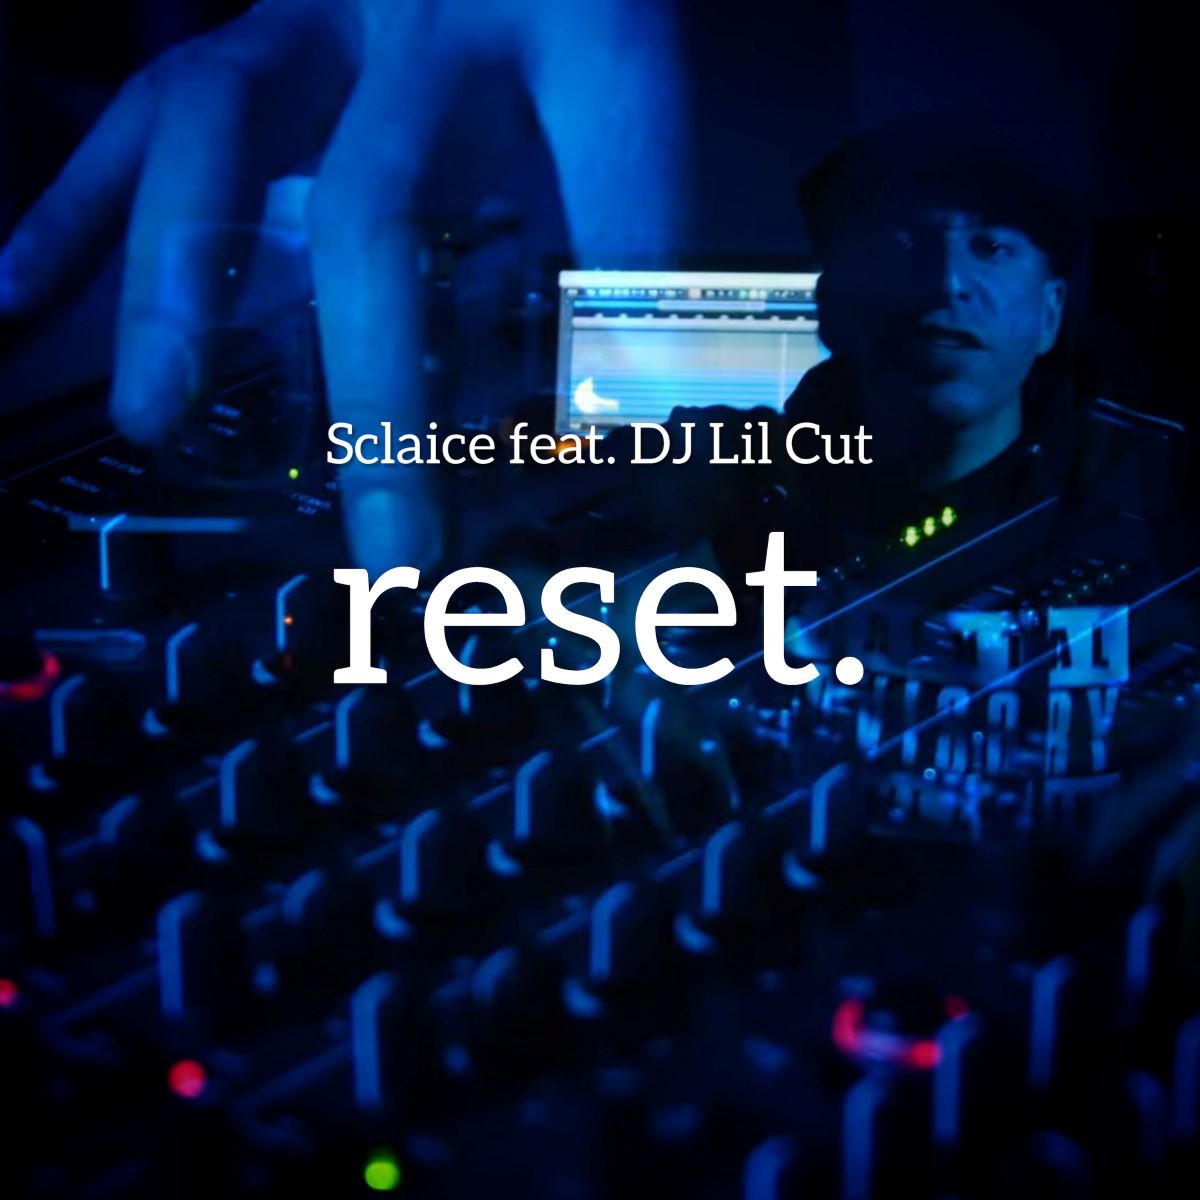 Sclaice feat. DJ Lil Cut - Il singolo “Reset”